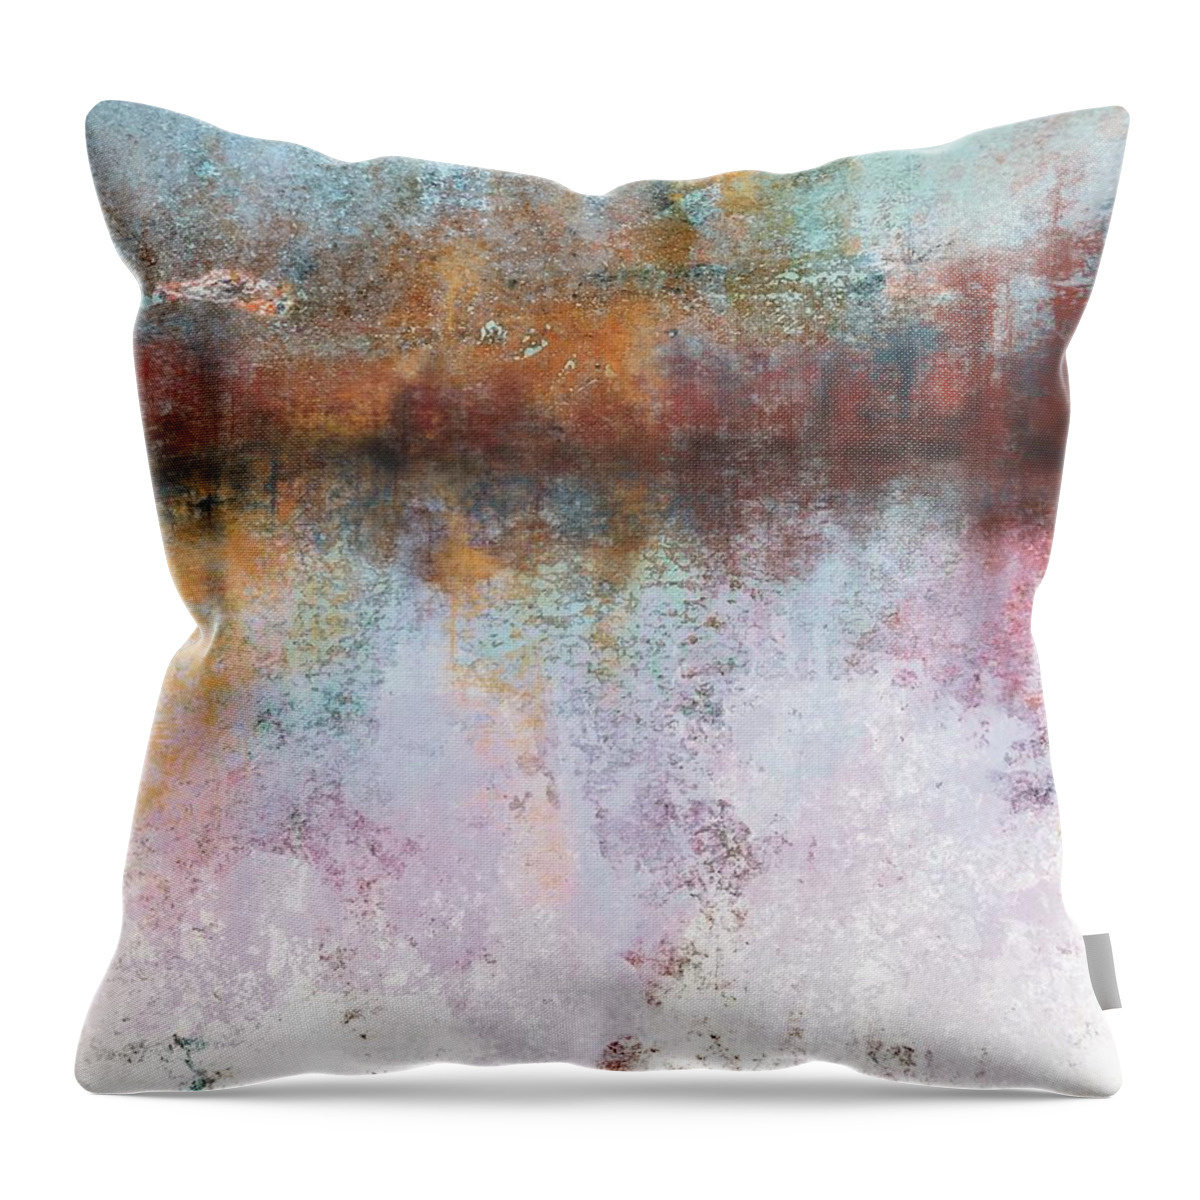 Acrylic Monoprint Throw Pillow featuring the digital art Frozen by Judi Lynn